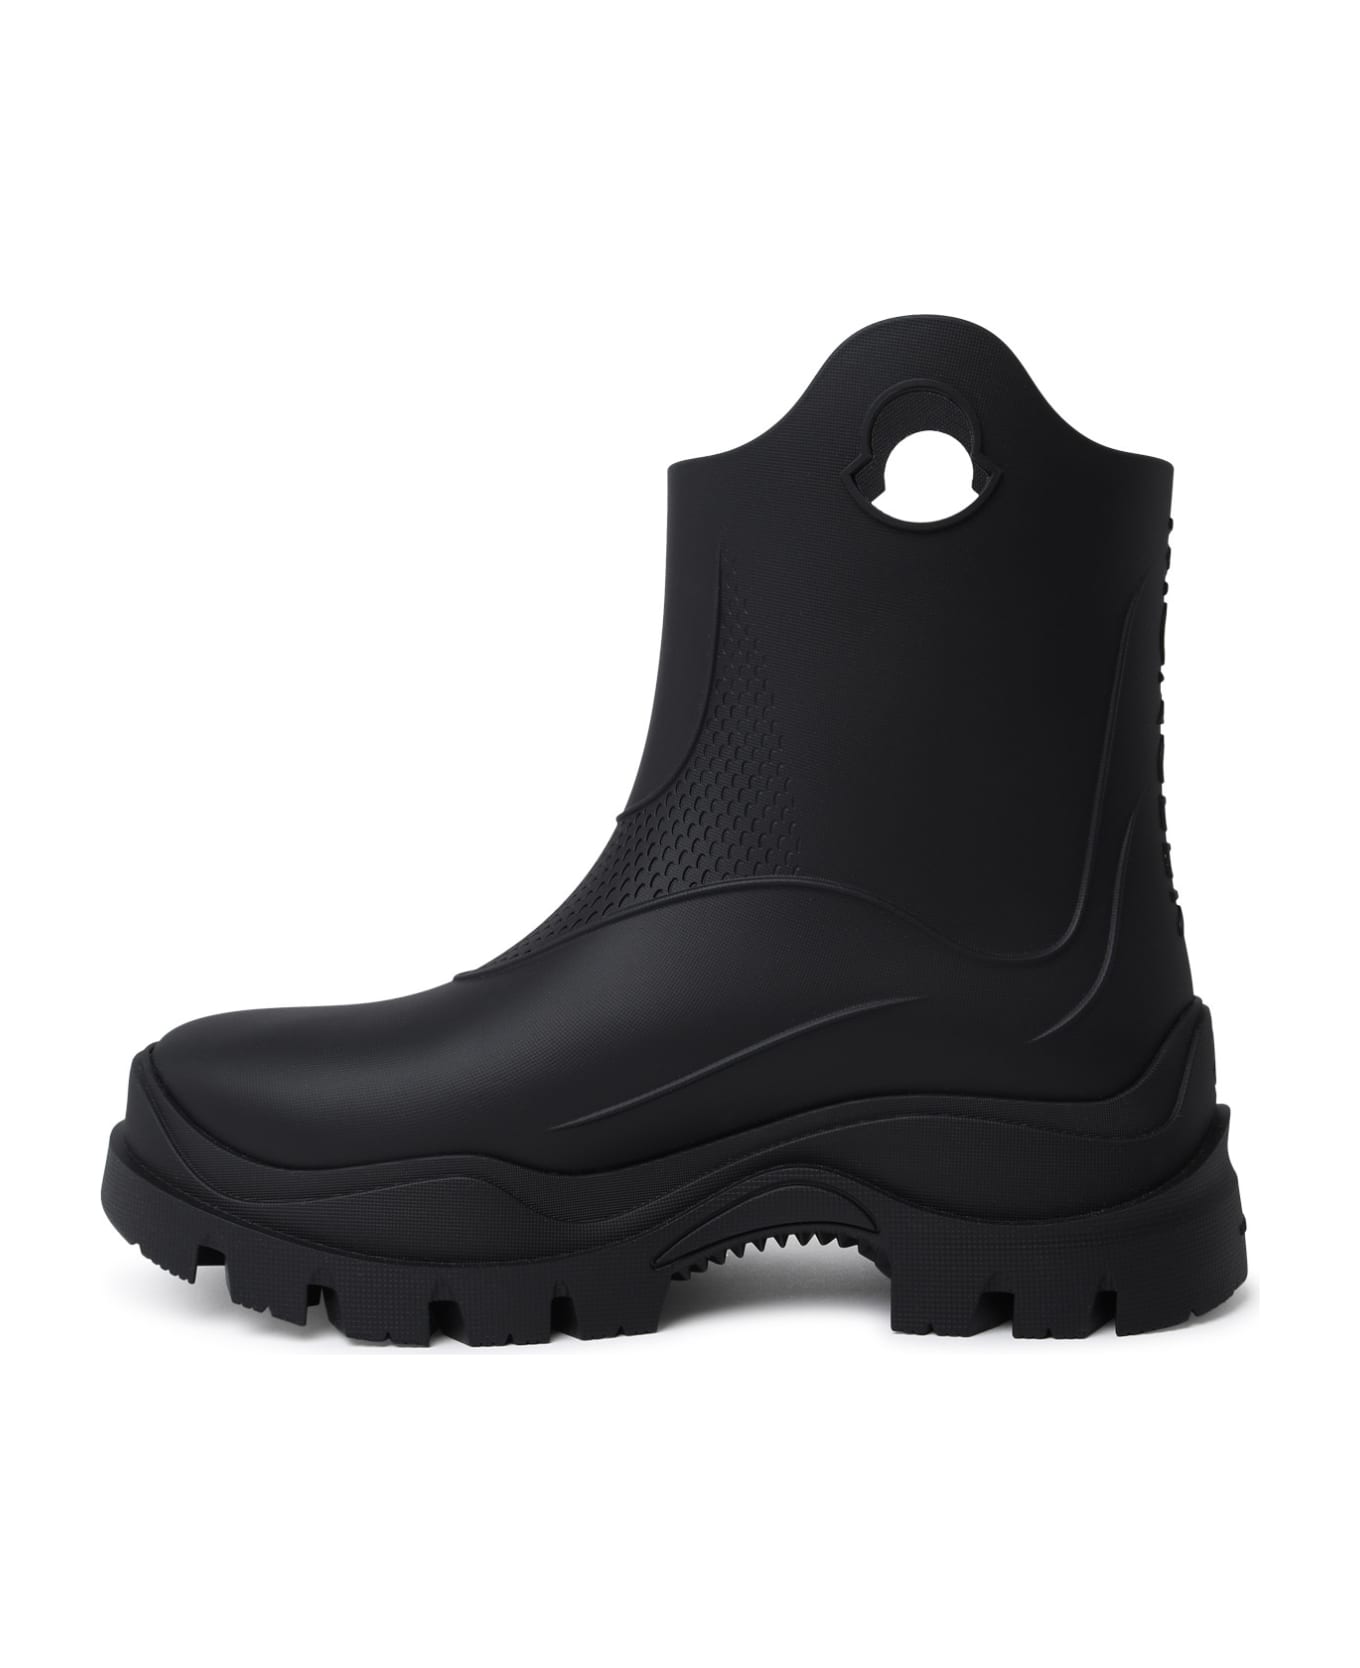 Moncler 'misty' Black Pvc Rain Boots - black ブーツ